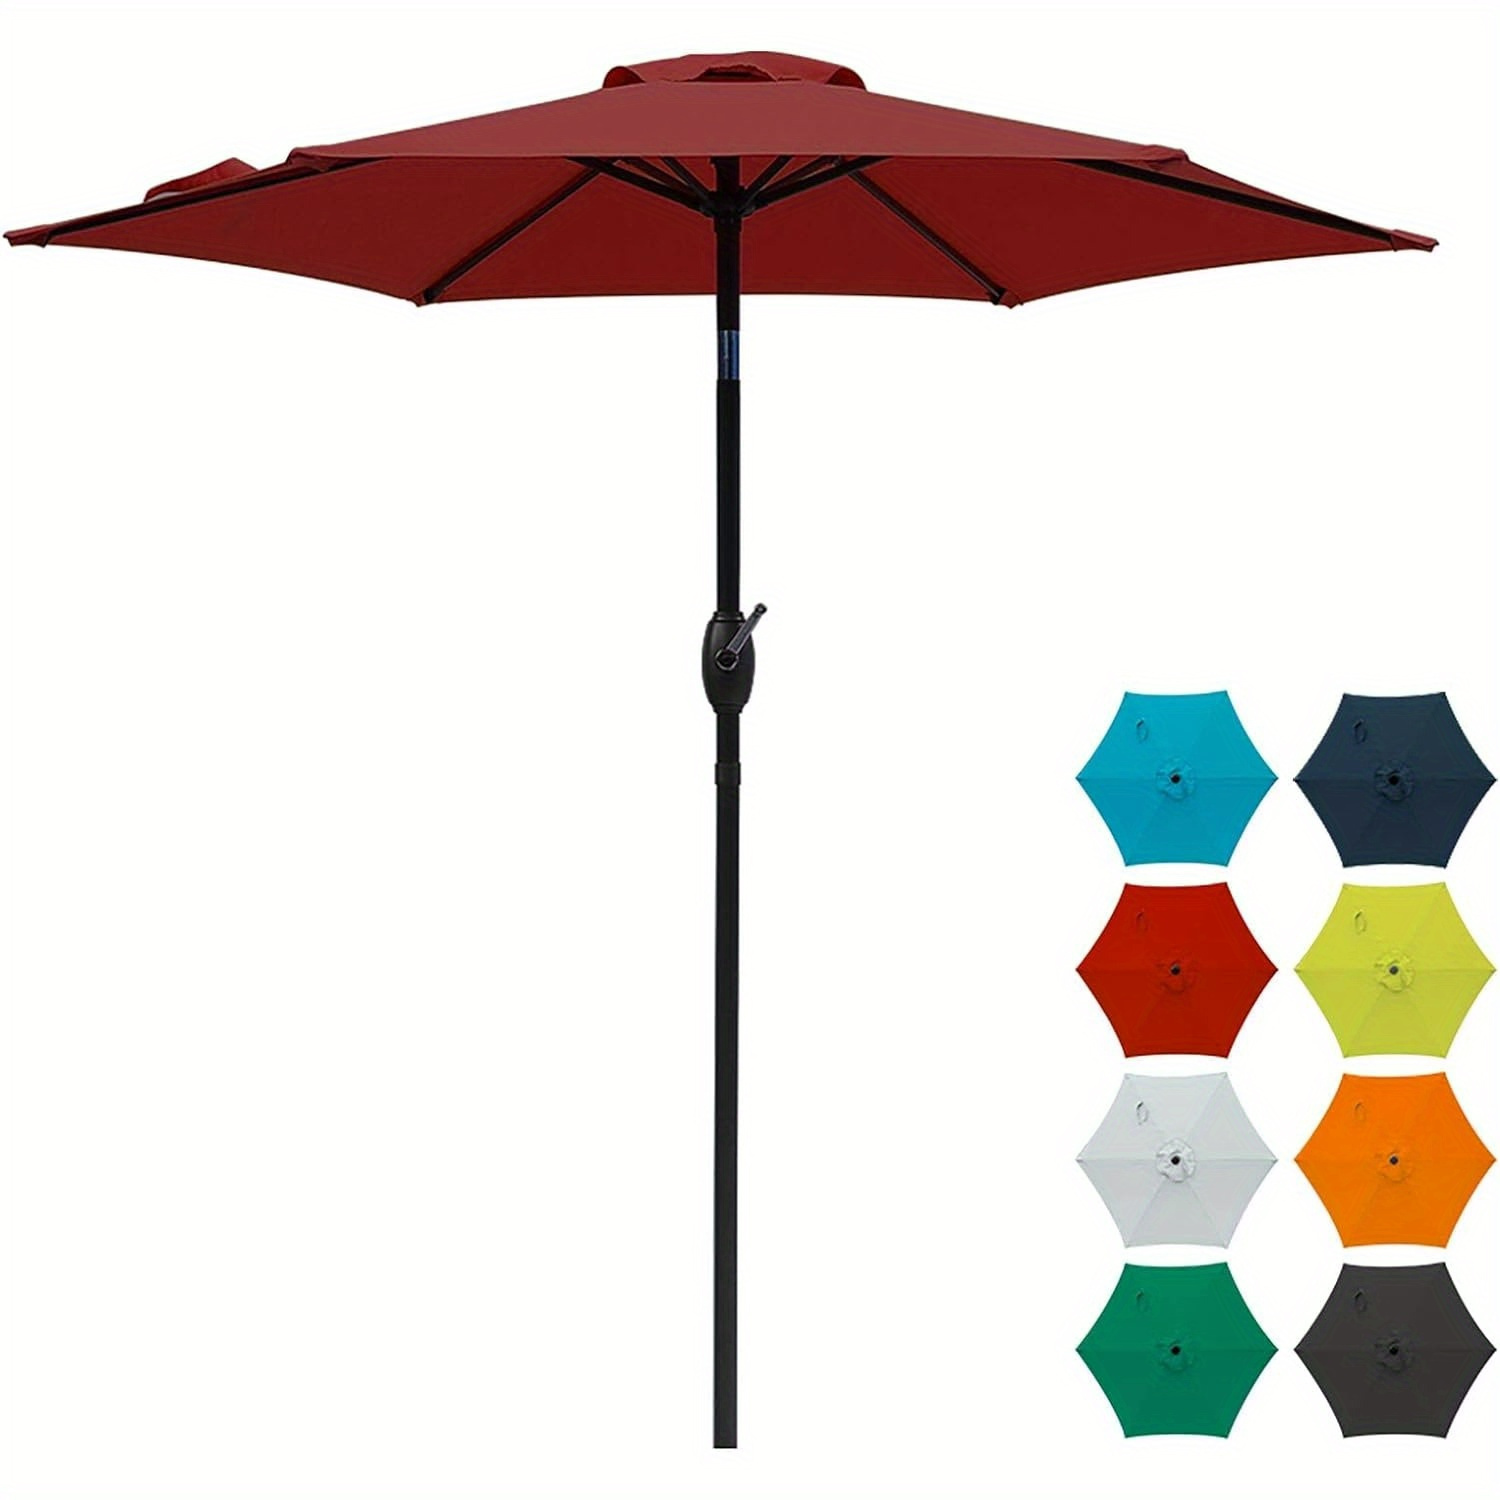 

Outdoor 7.5 Ft Patio Umbrella Outdoor Market Table Umbrella Luxury Aluminum Pole Umbrella With Push Button Tilt And Crank, 6 Ribs, Polyester Canopy